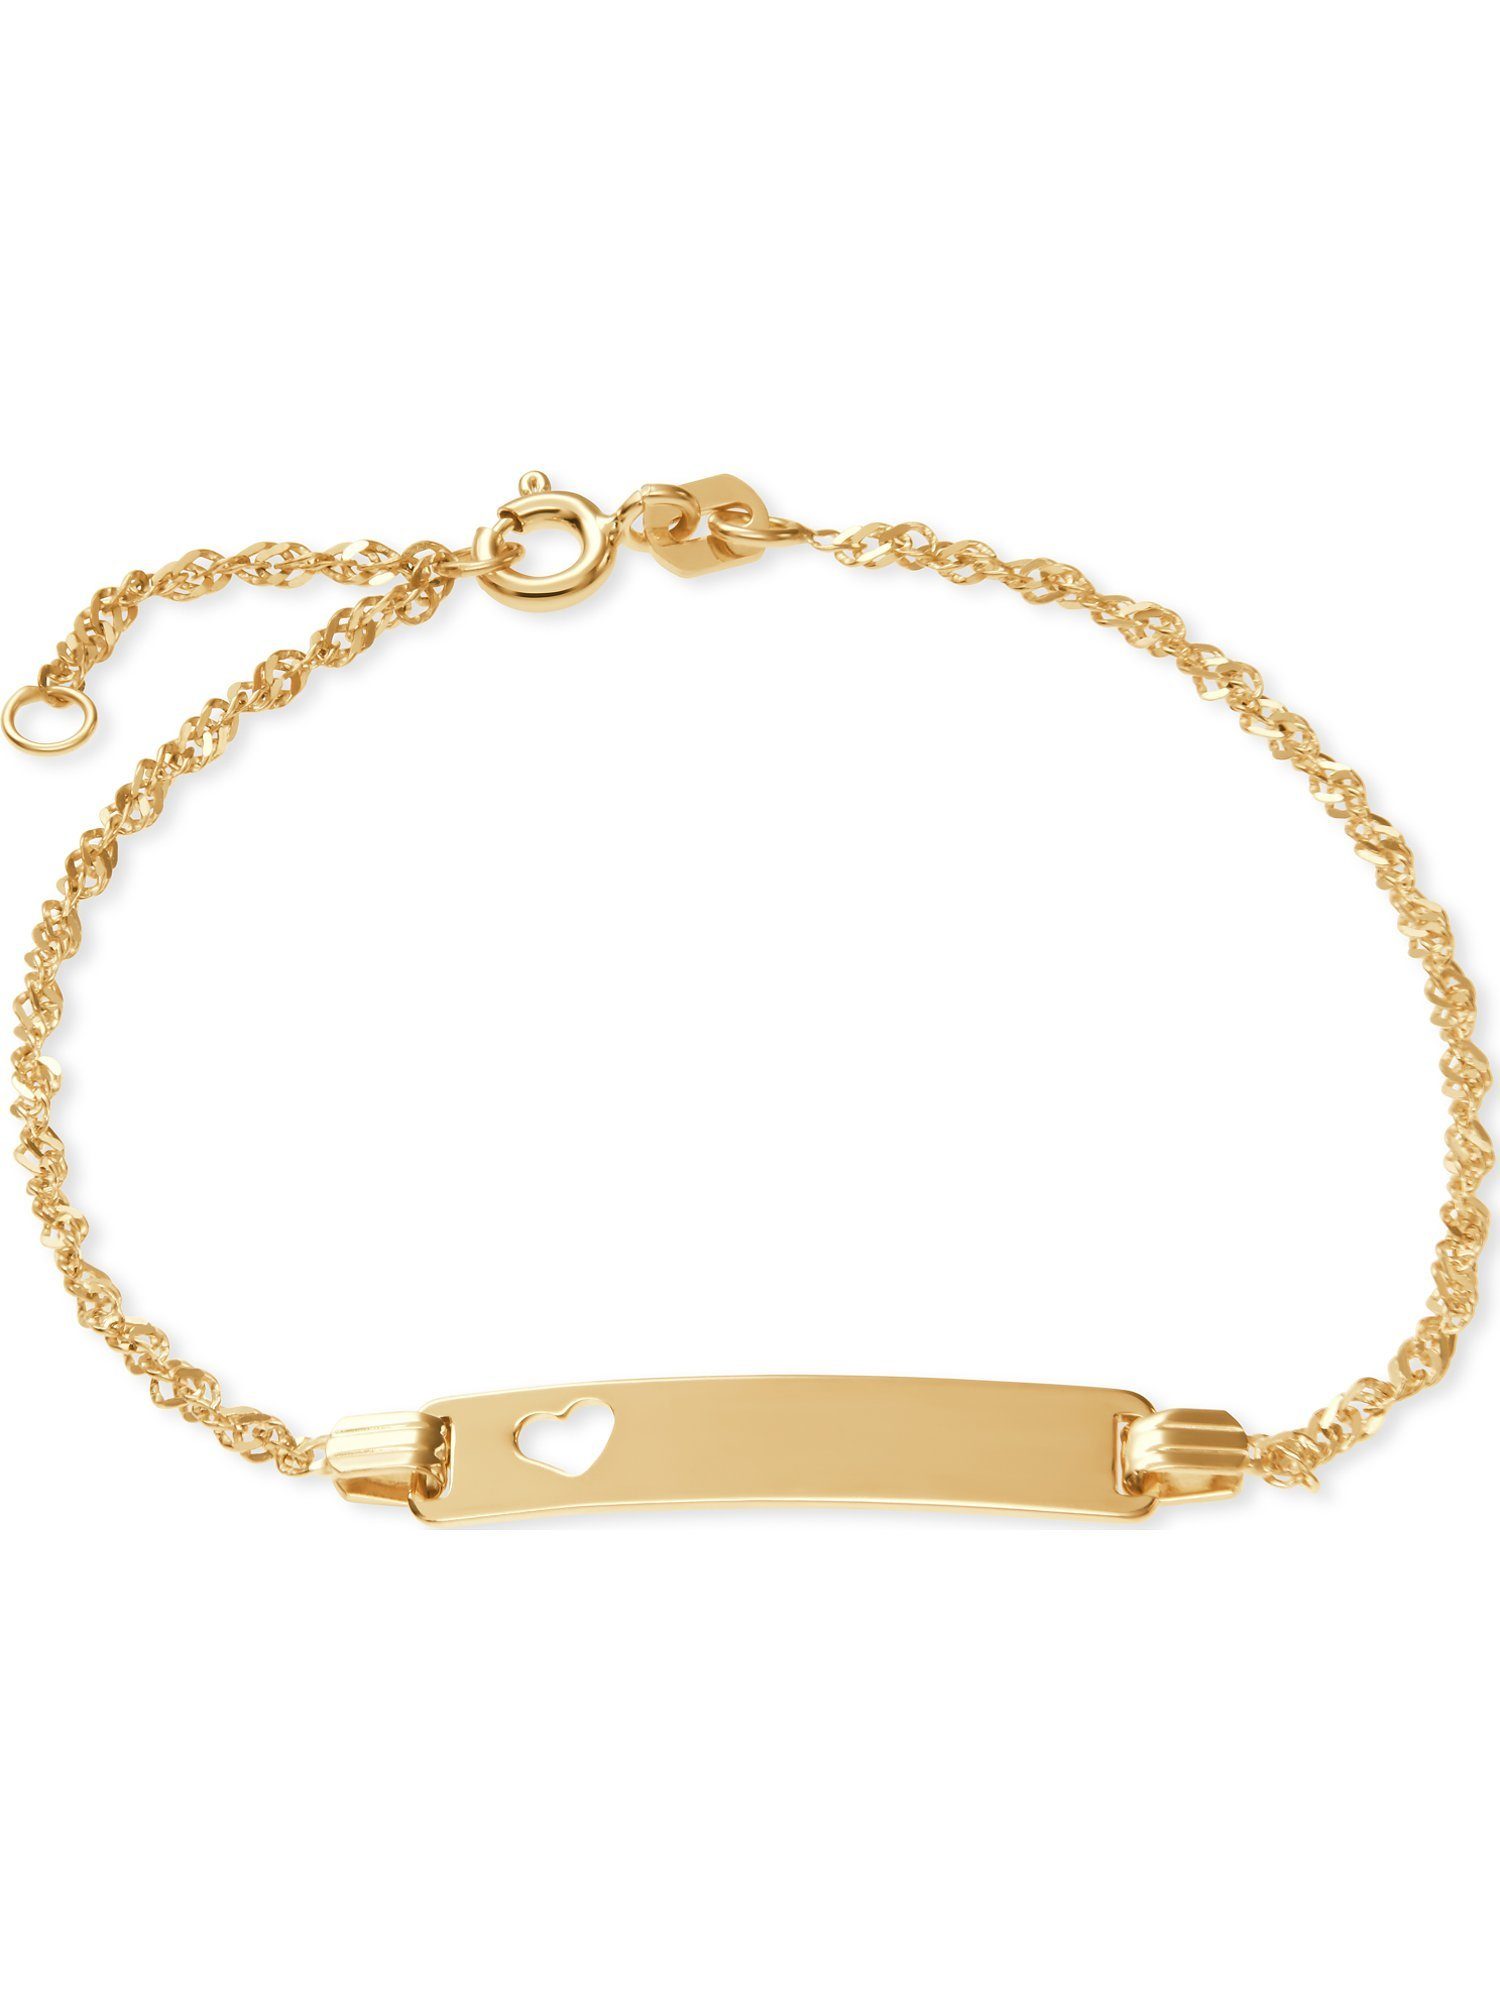 Wir stellen eine super berühmte Marke vor! FAVS Silberarmband FAVS Gelbgold 375er Mädchen-I.D.-Armband